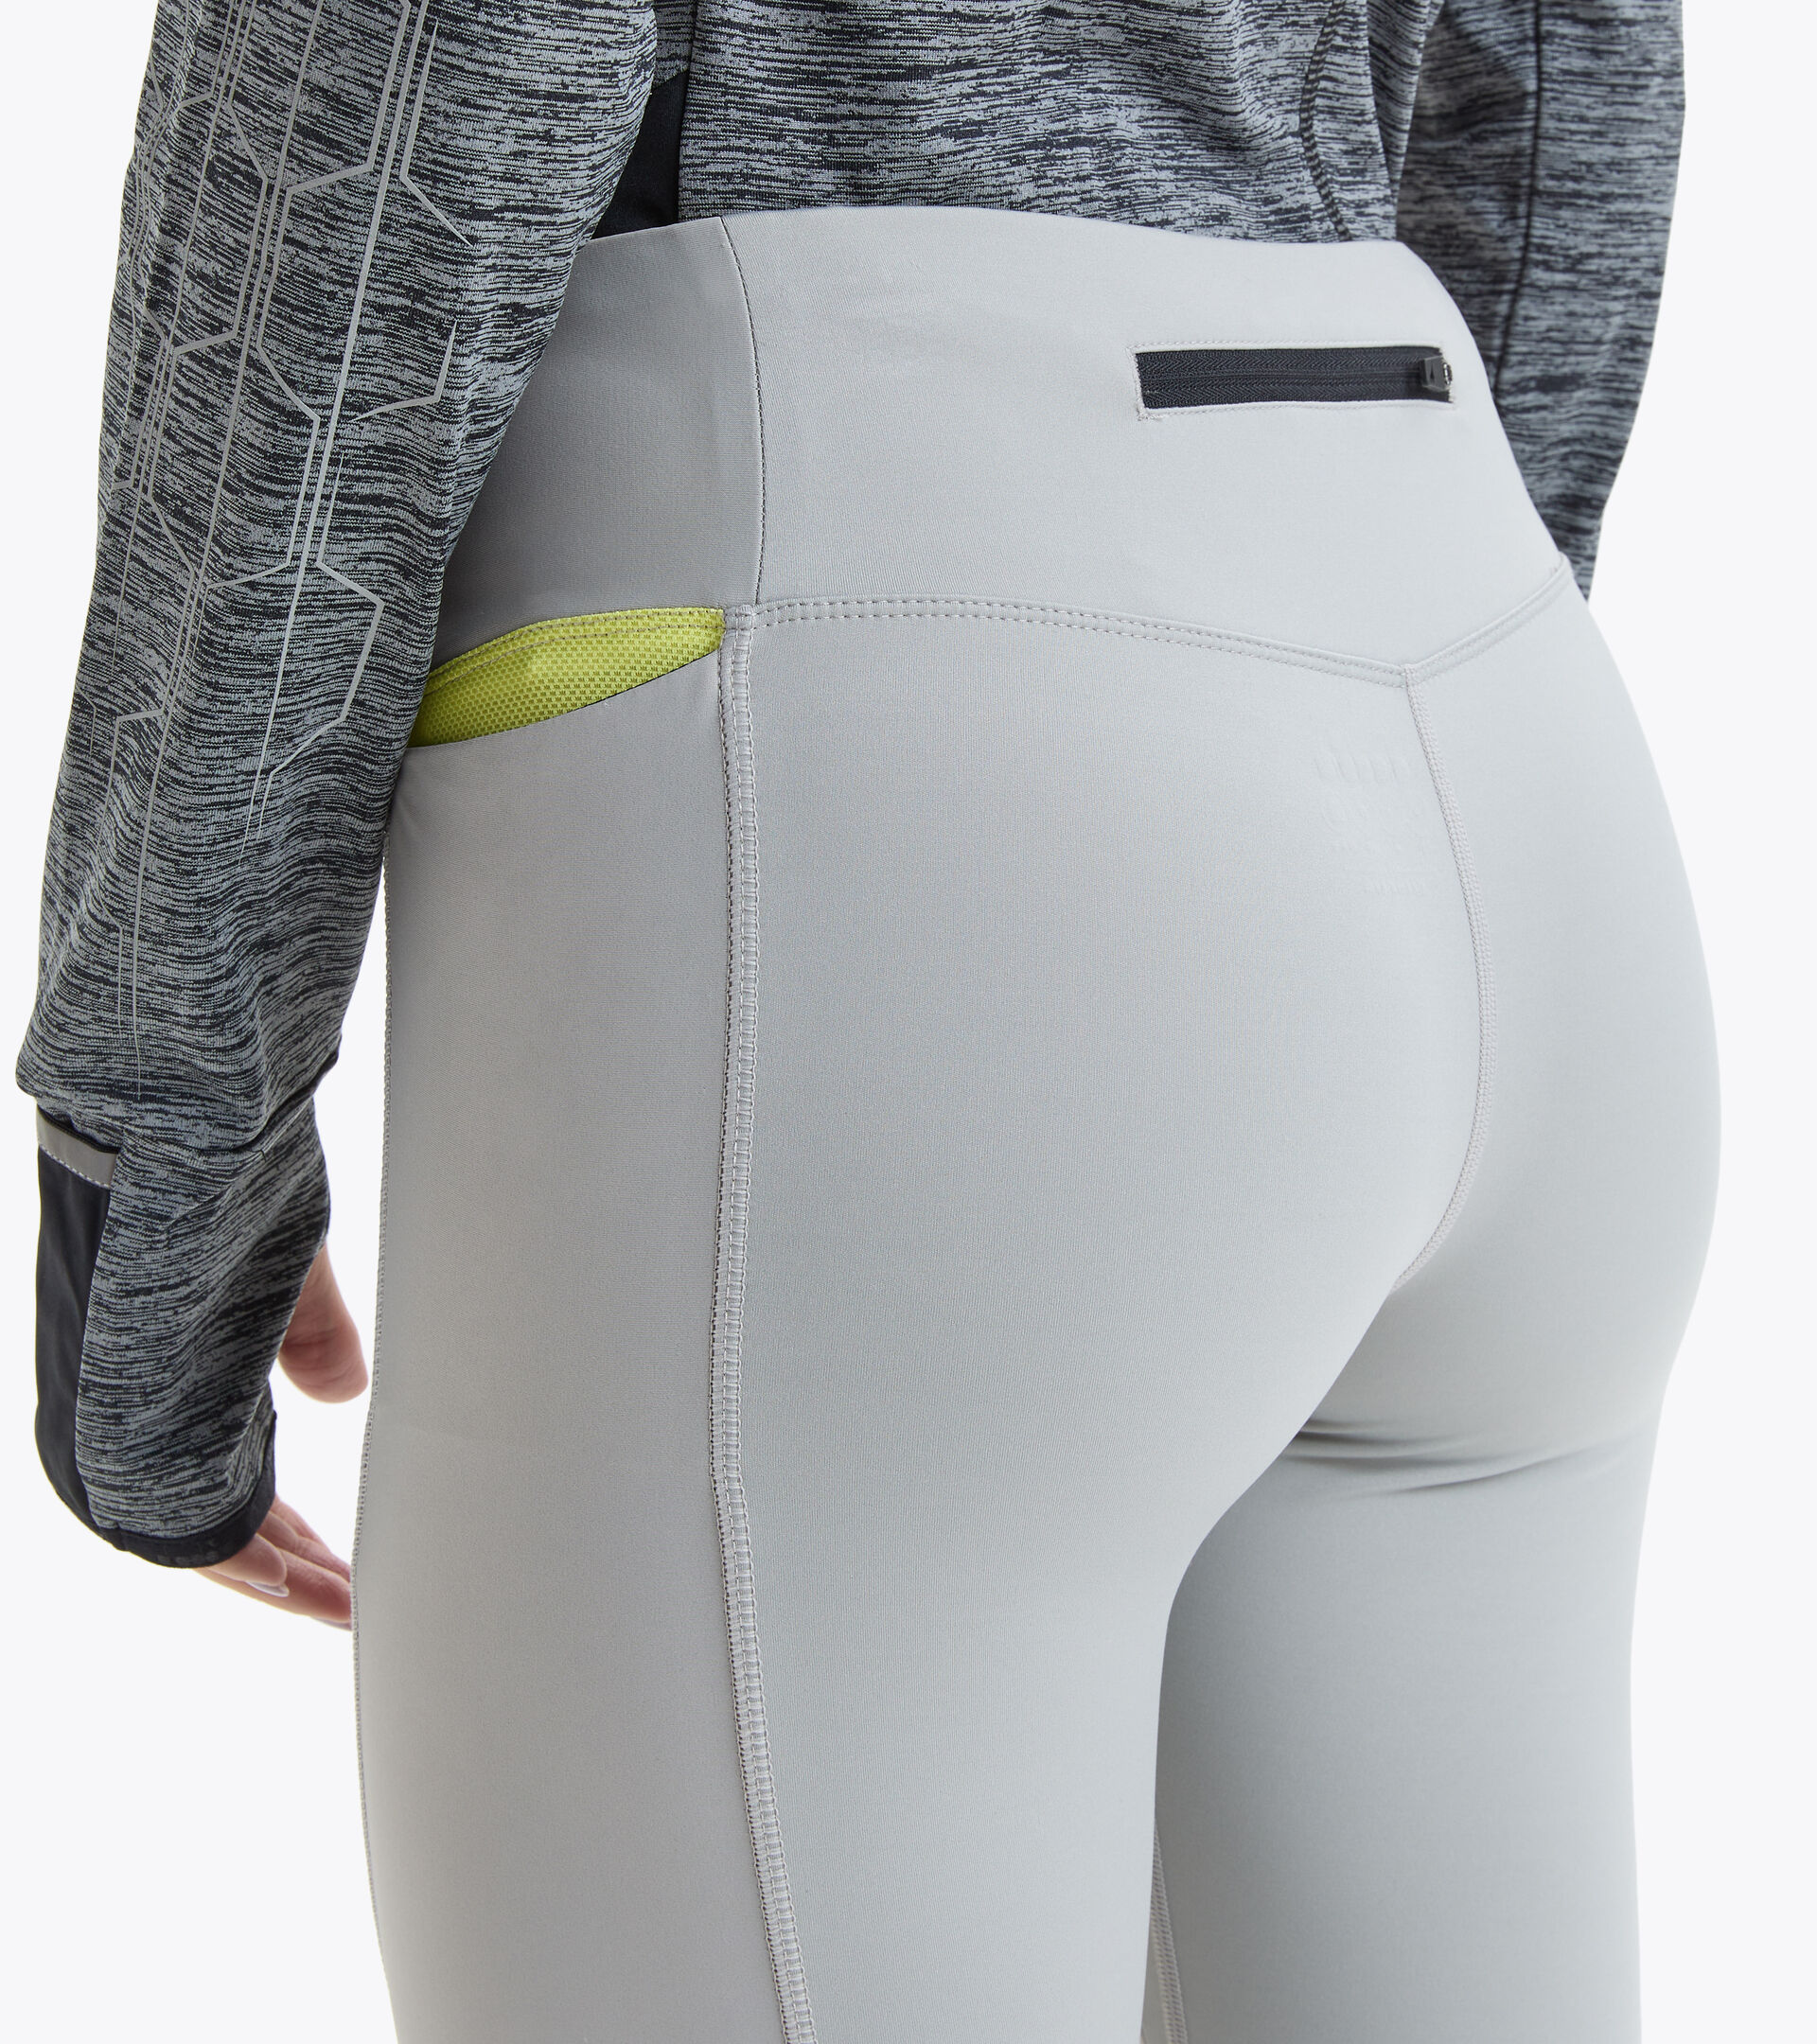 L. RUN TIGHTS WINTER PROTECTION Thermal leggings - Women - Diadora Online  Store IN